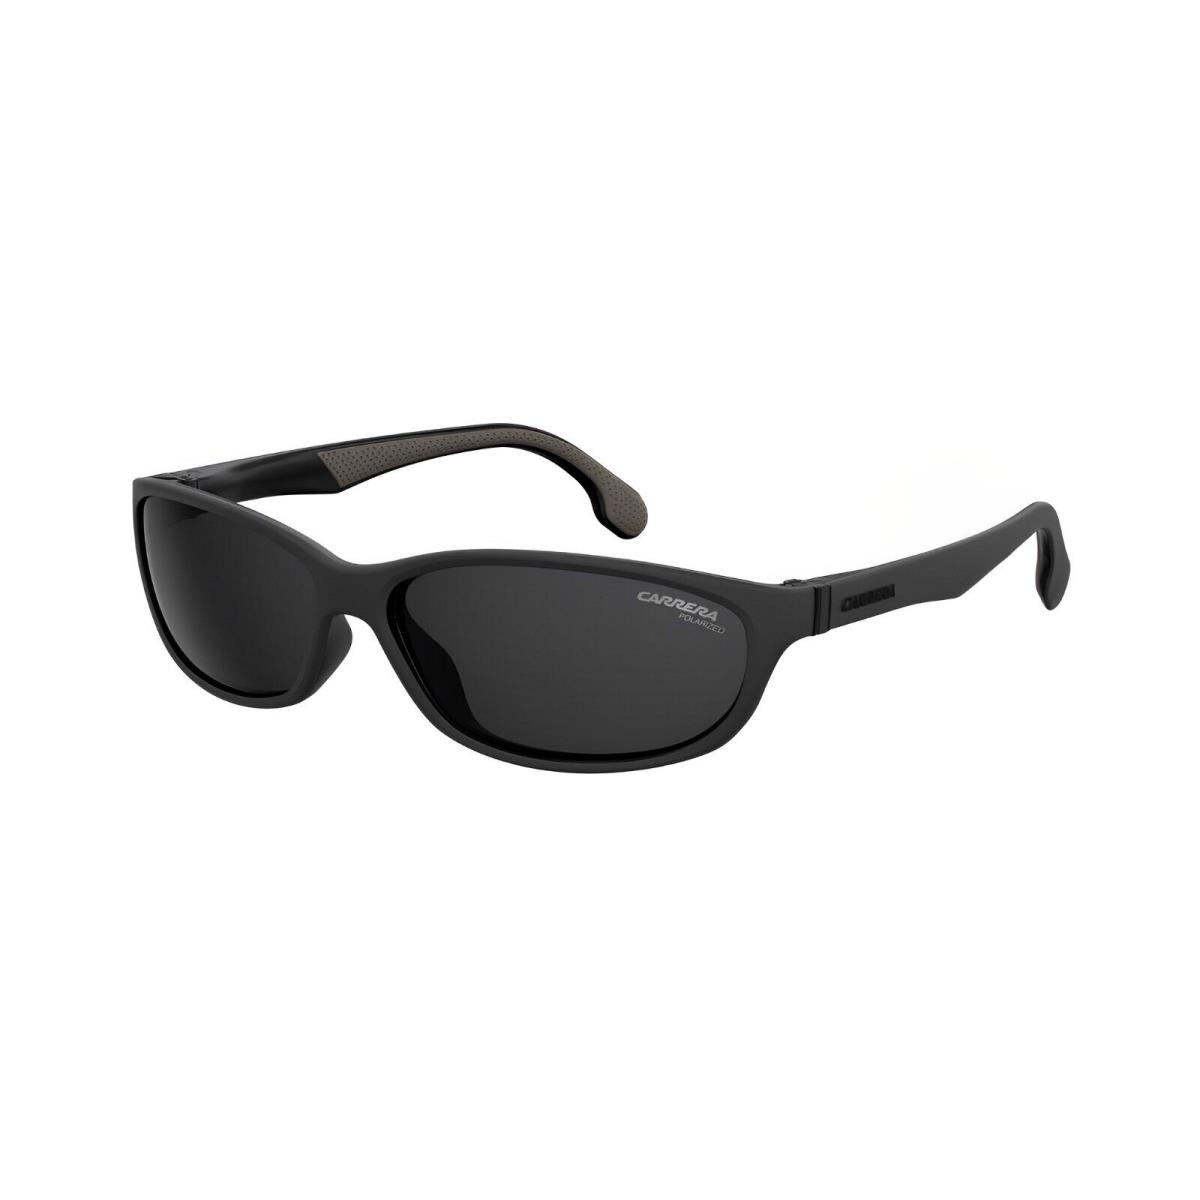 Carrera Sunglasses - 5052/S 0003- Black/gray Lens 61-14-135